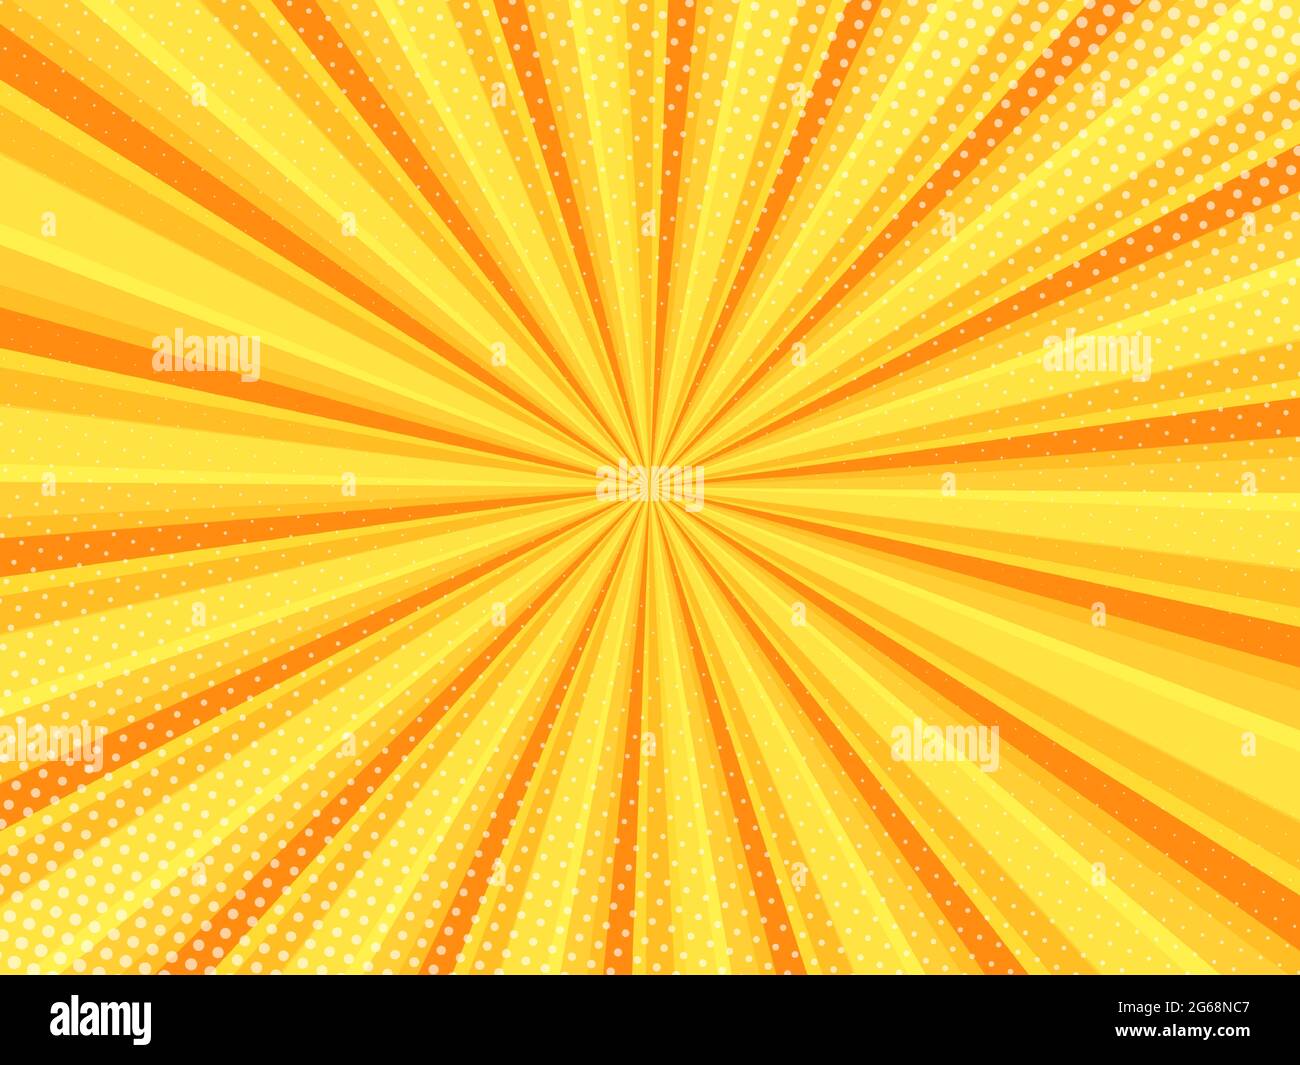 Yellow comic background with halftone. Pop art style effect, cartoon comic orange background with lightning blast halftone dots. Vector illustration. Stock Vector